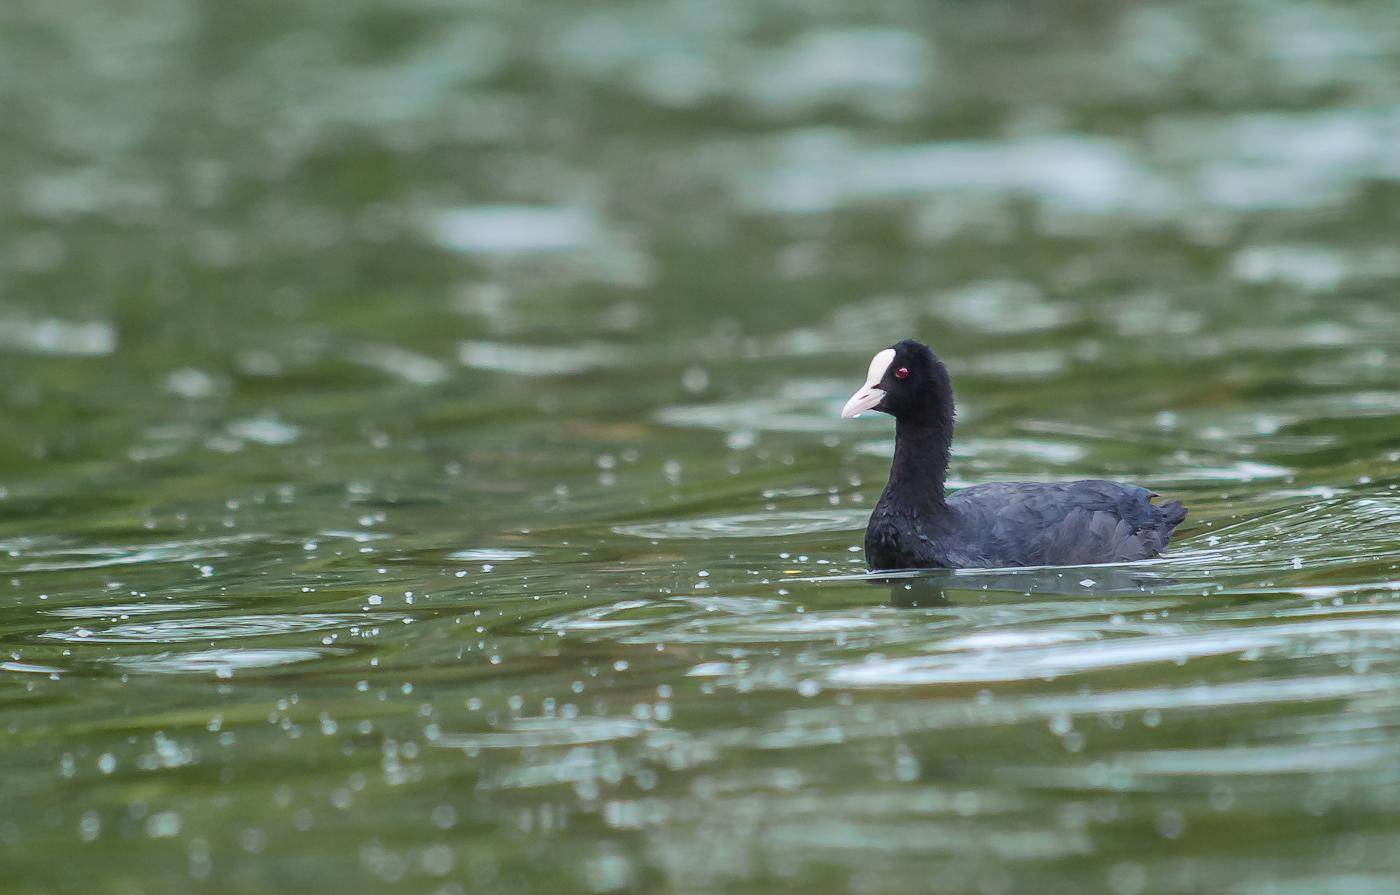 black bird swims in the water near a shore